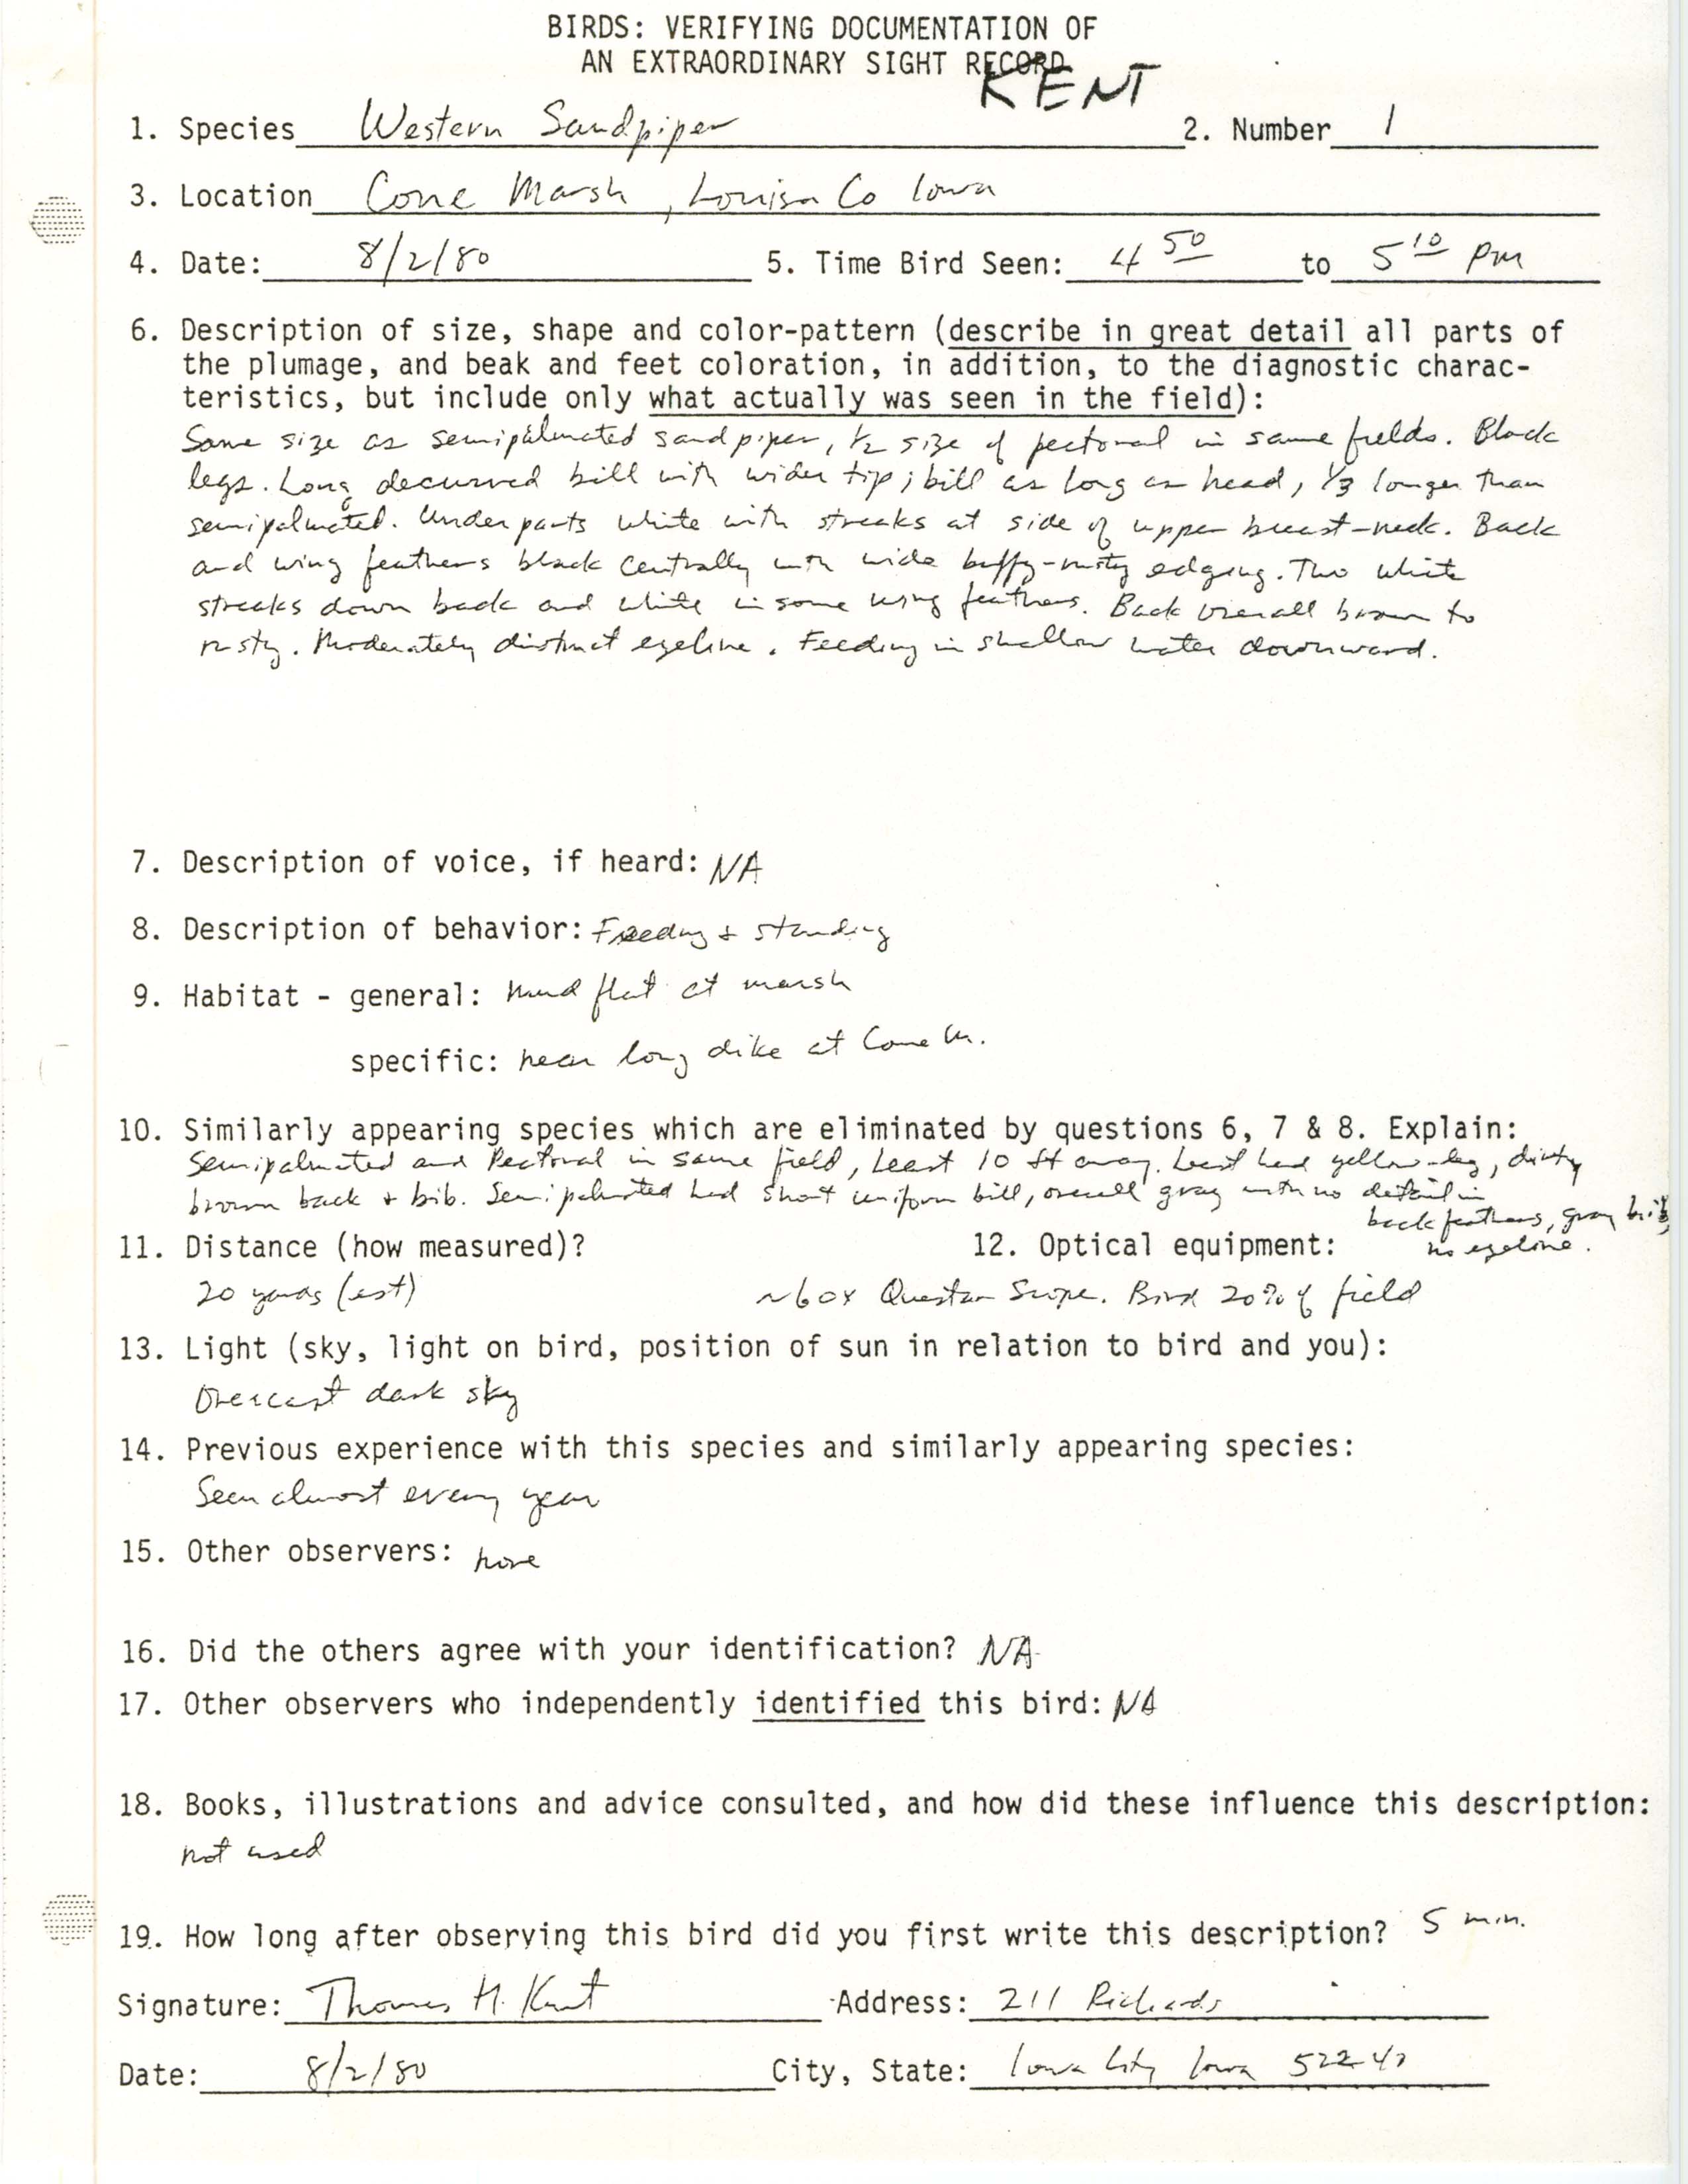 Rare bird documentation form for Western Sandpiper at Cone Marsh, 1980